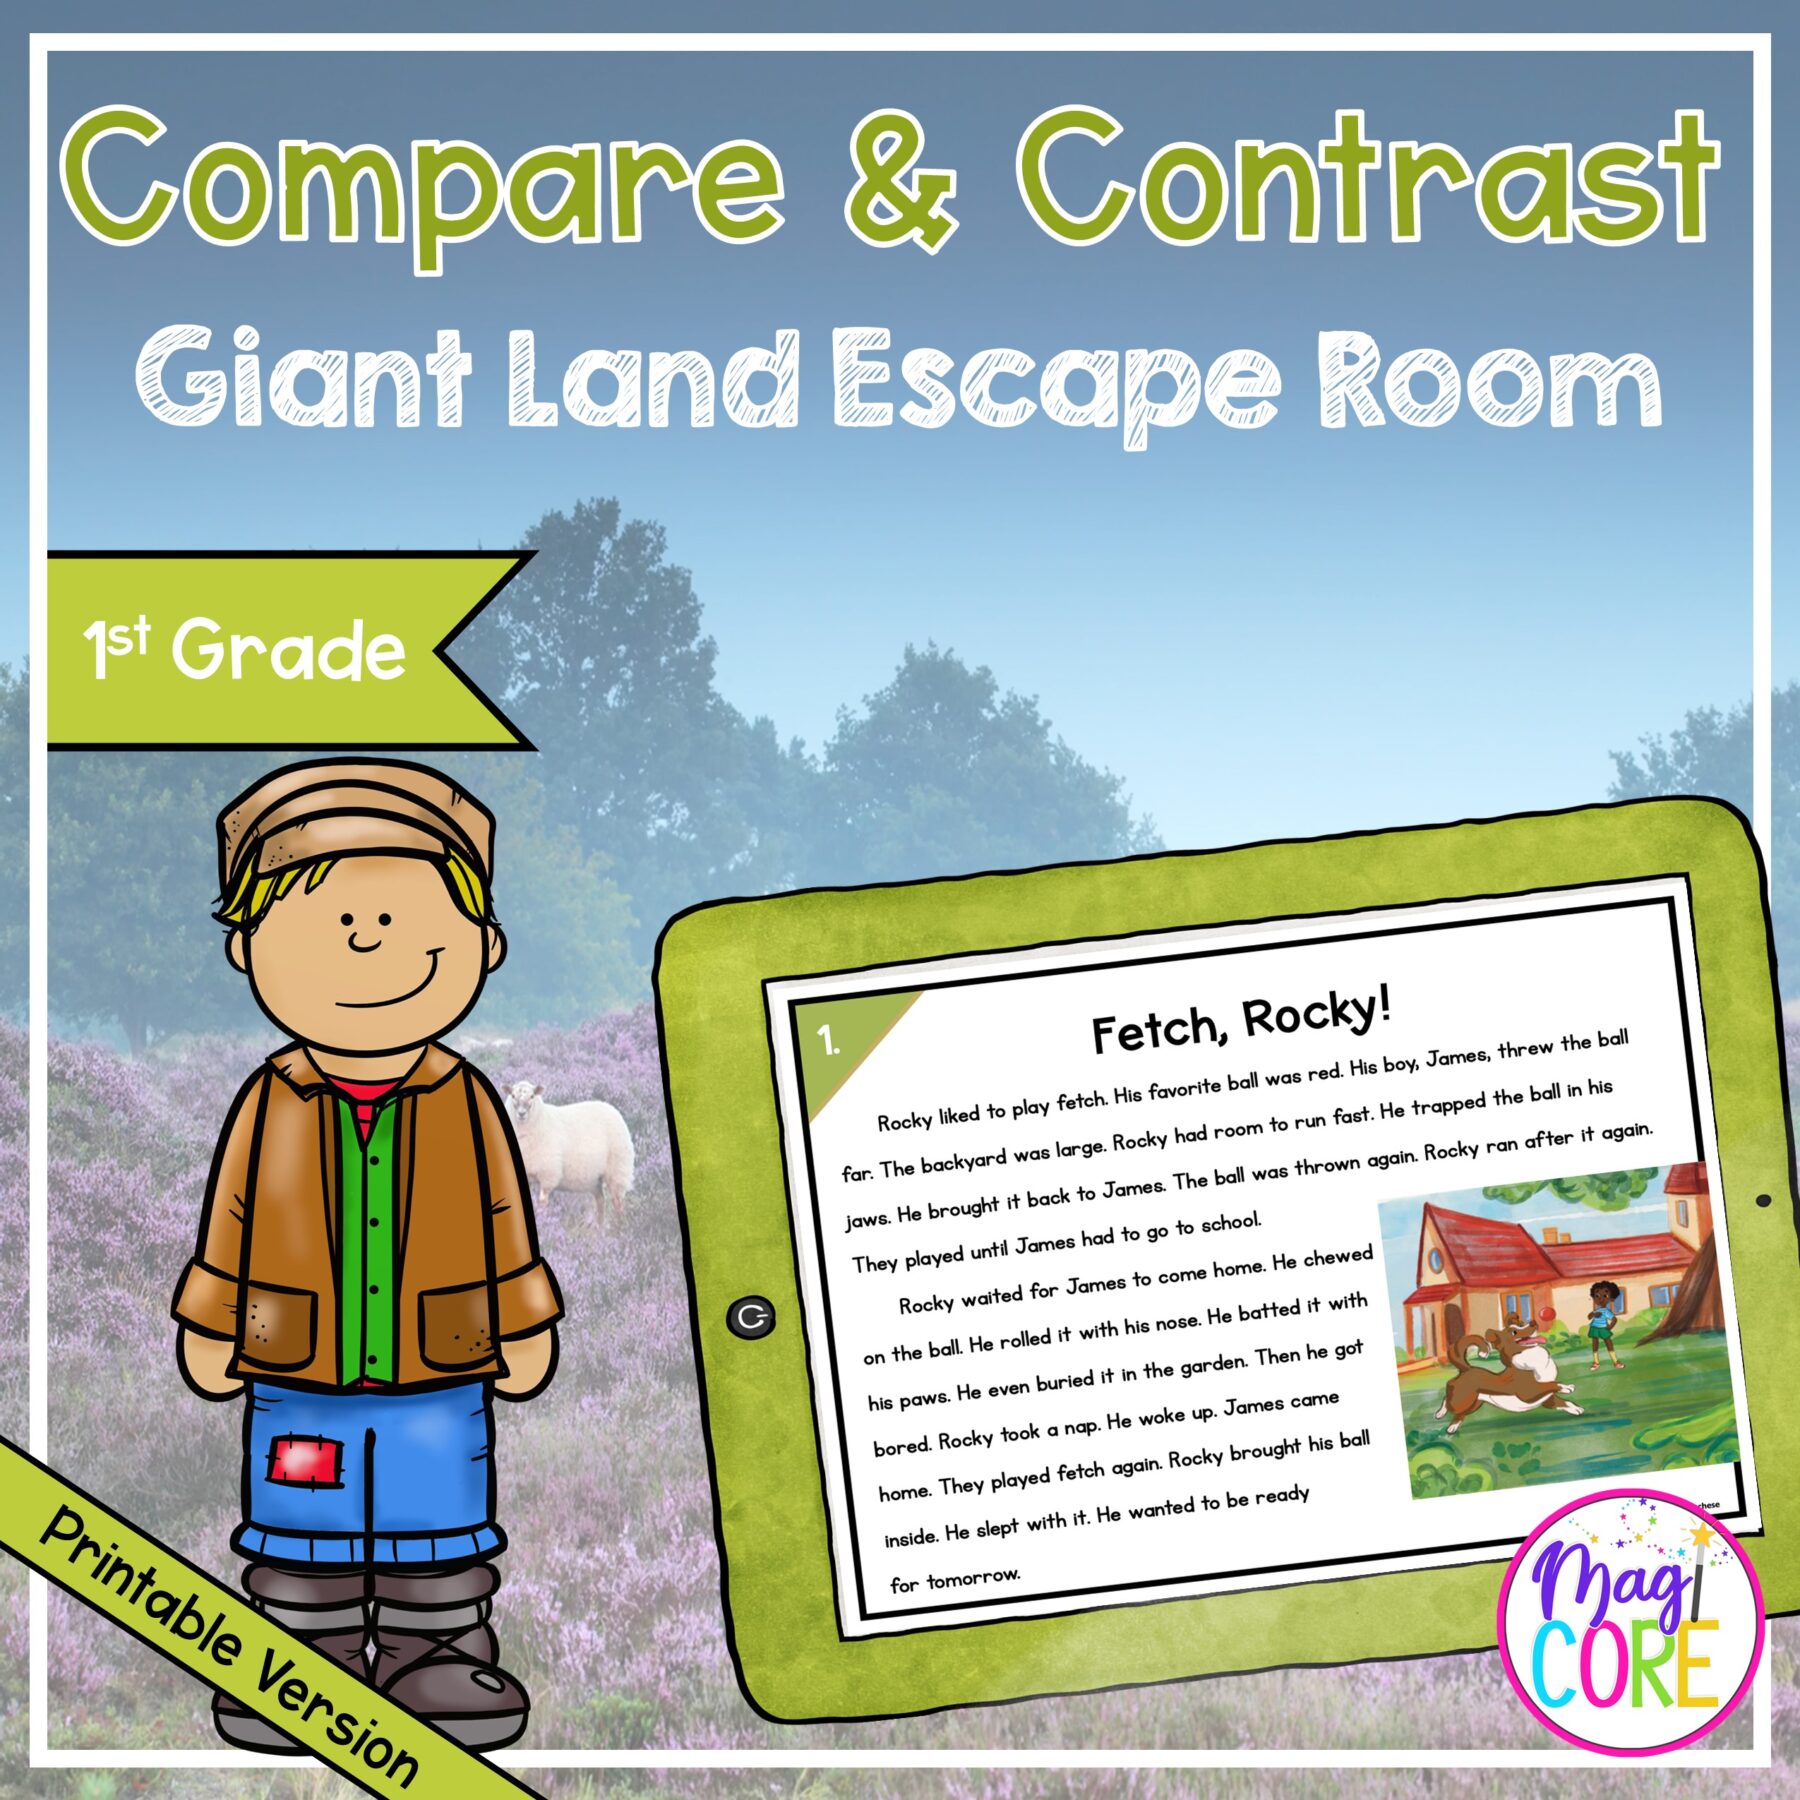 Compare & Contrast Giant Land Escape Room - 1st Grade